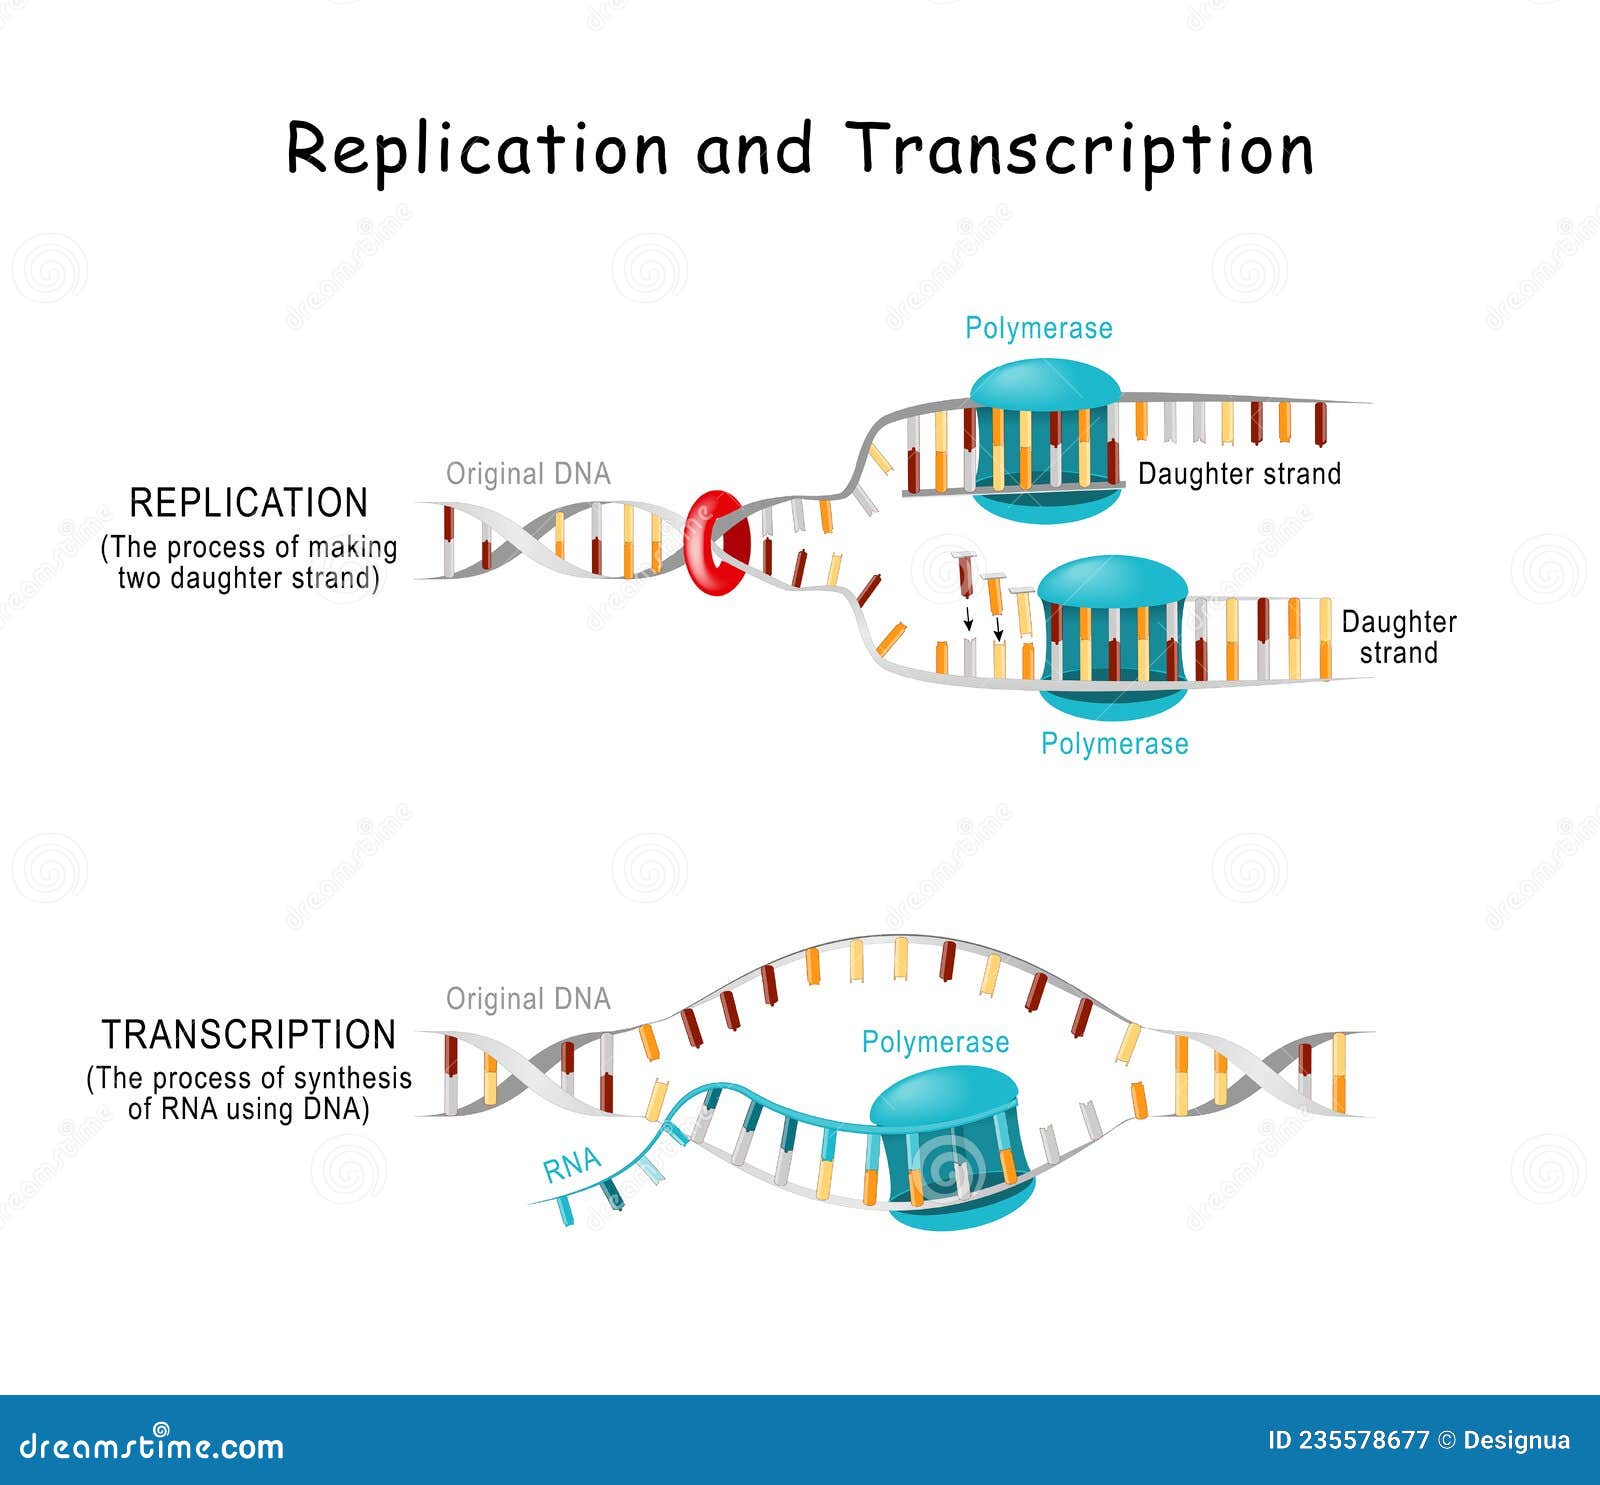 dna-replication-transcription-and-translation-vector-illustration